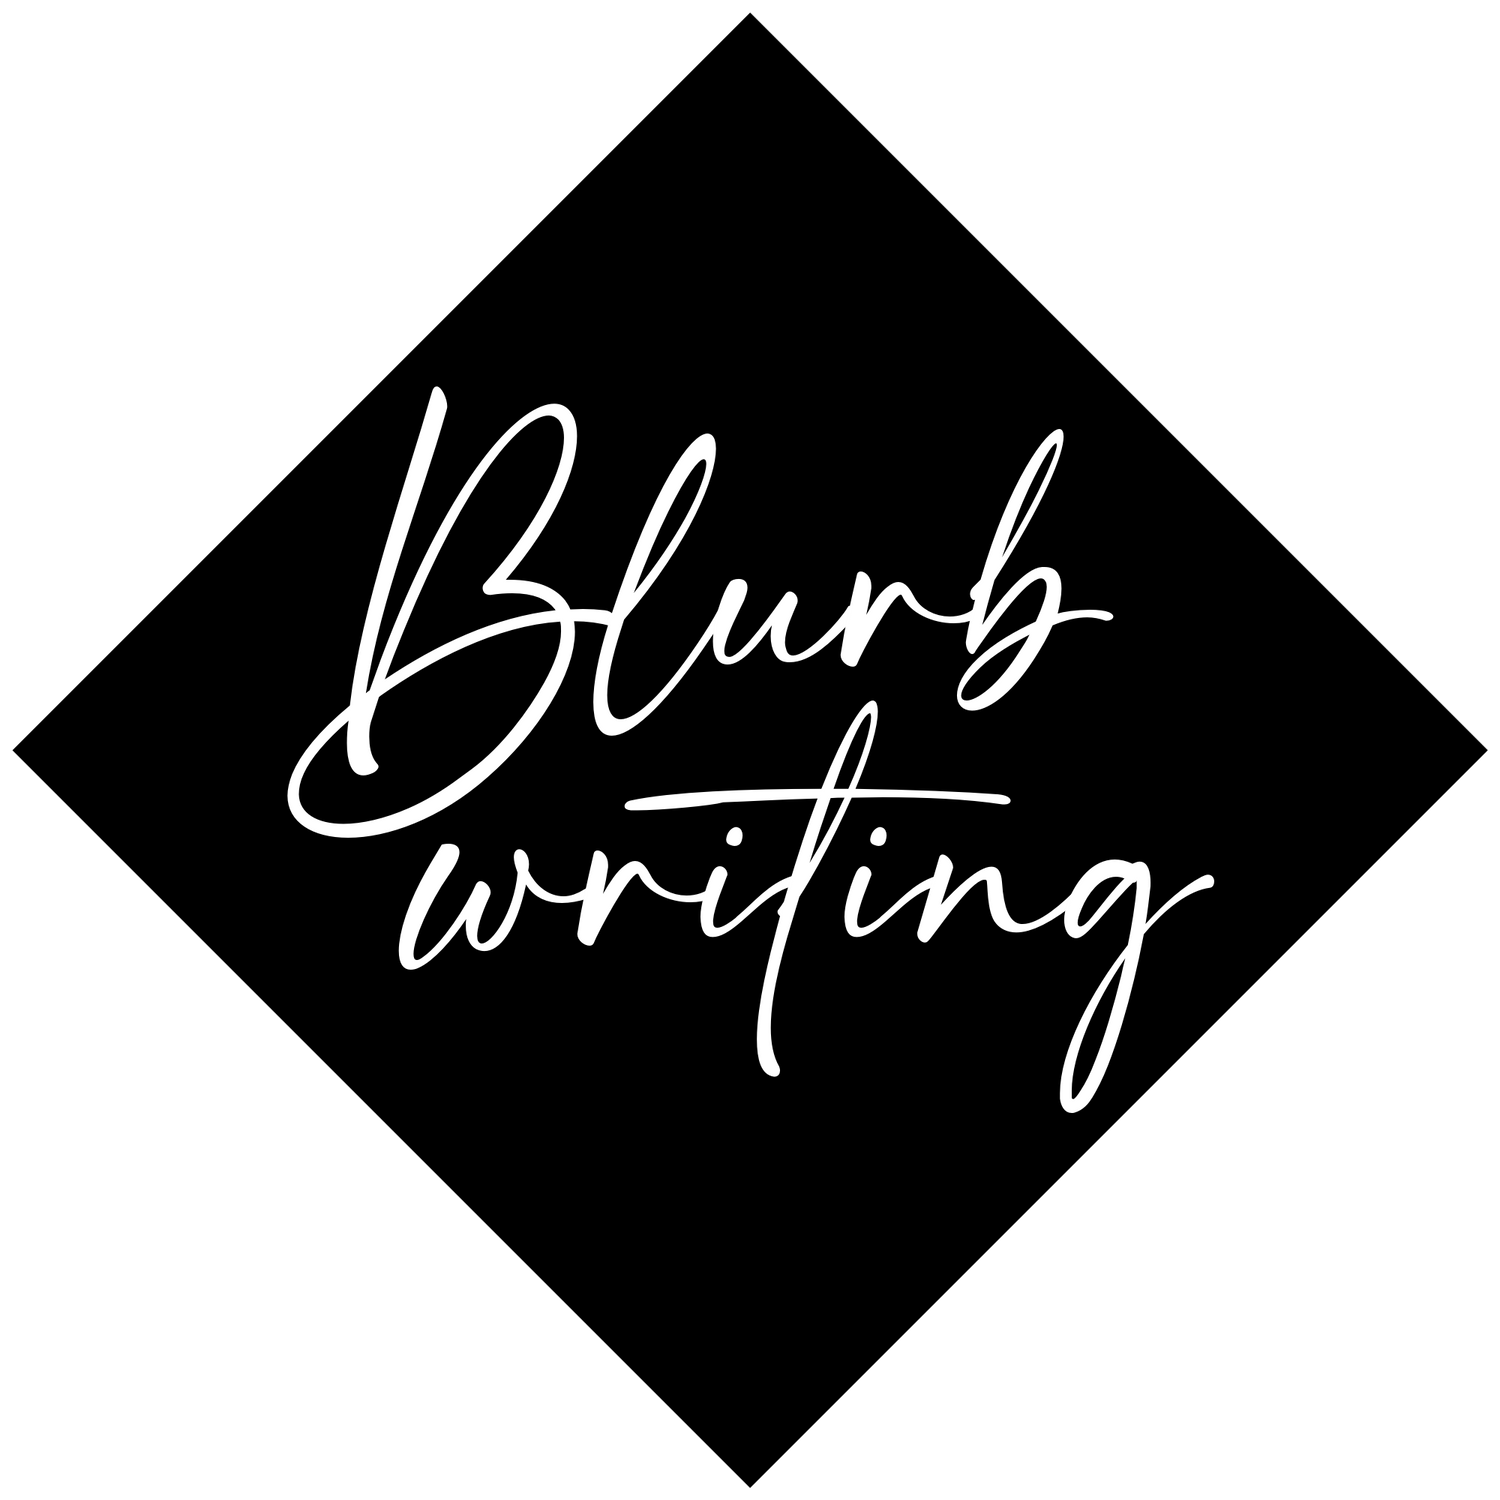 Blurb Writing